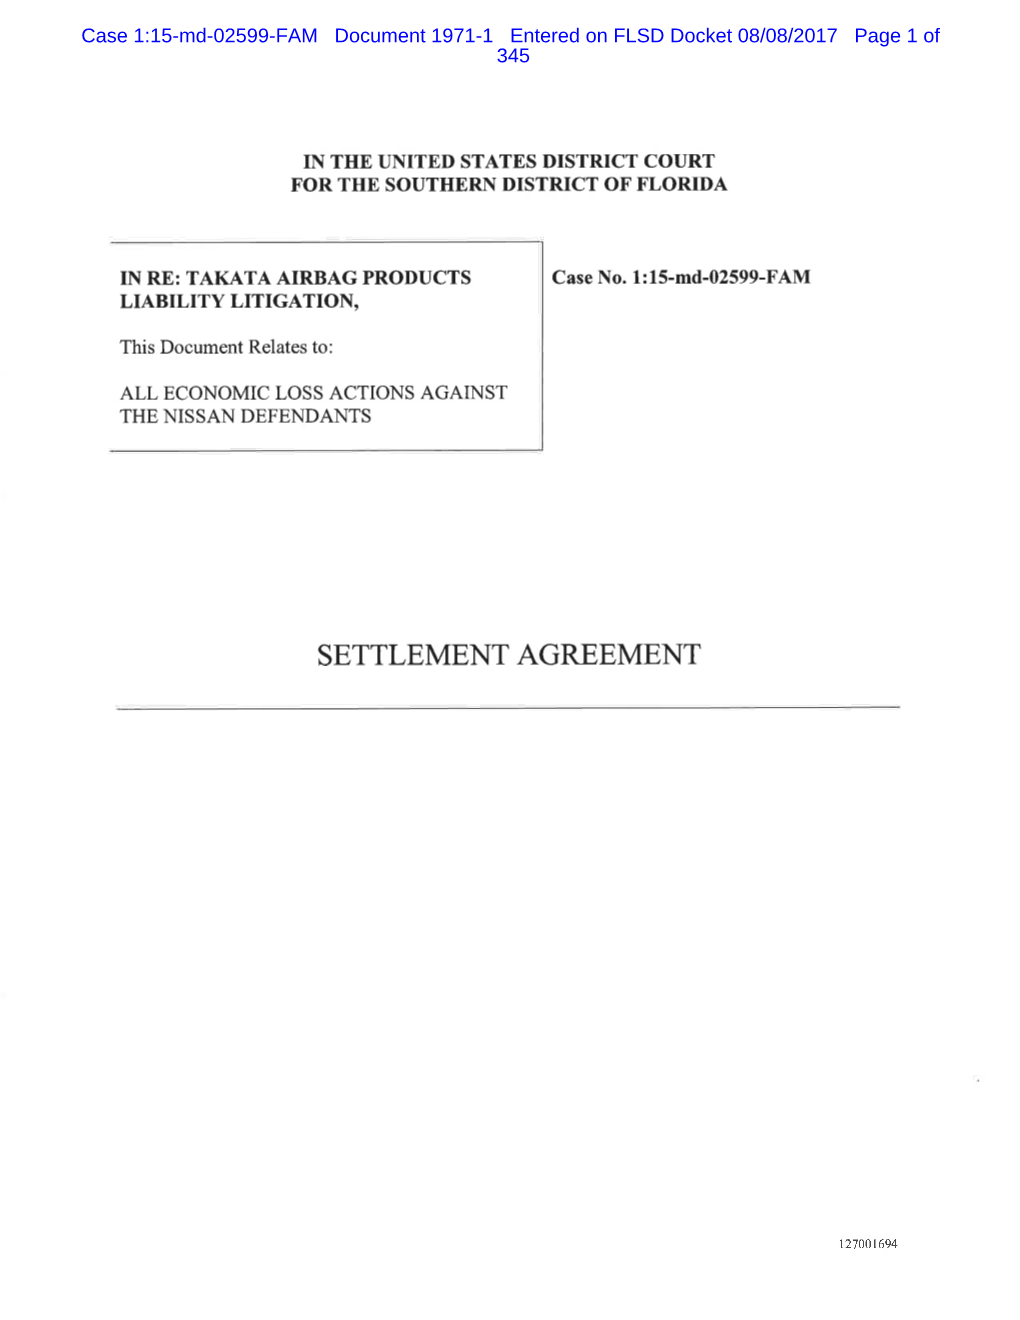 Nissan Settlement Agreement